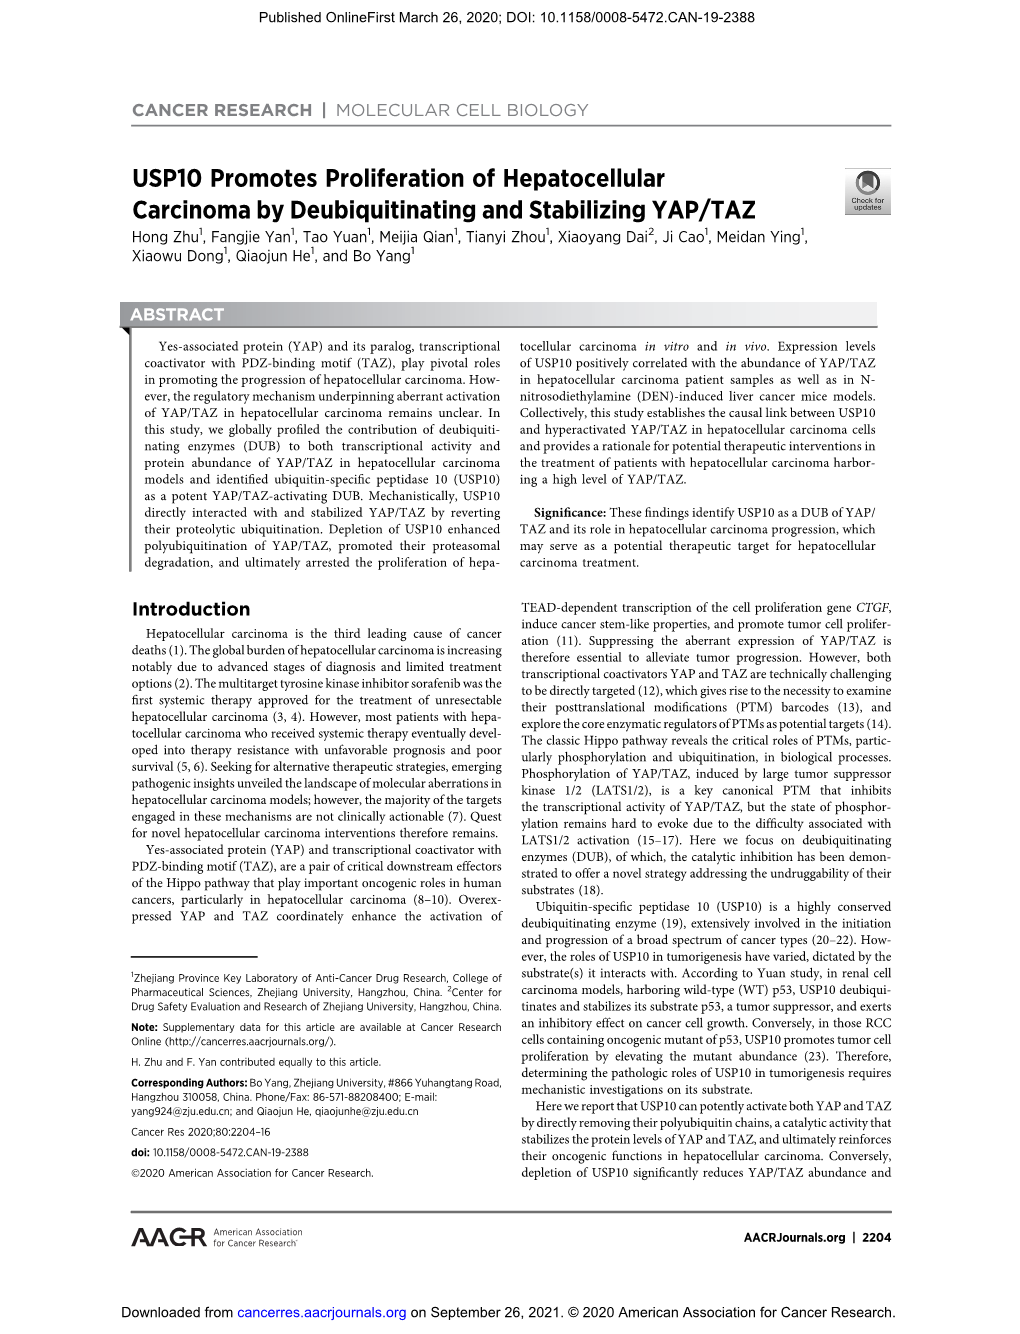 USP10 Promotes Proliferation of Hepatocellular Carcinoma By